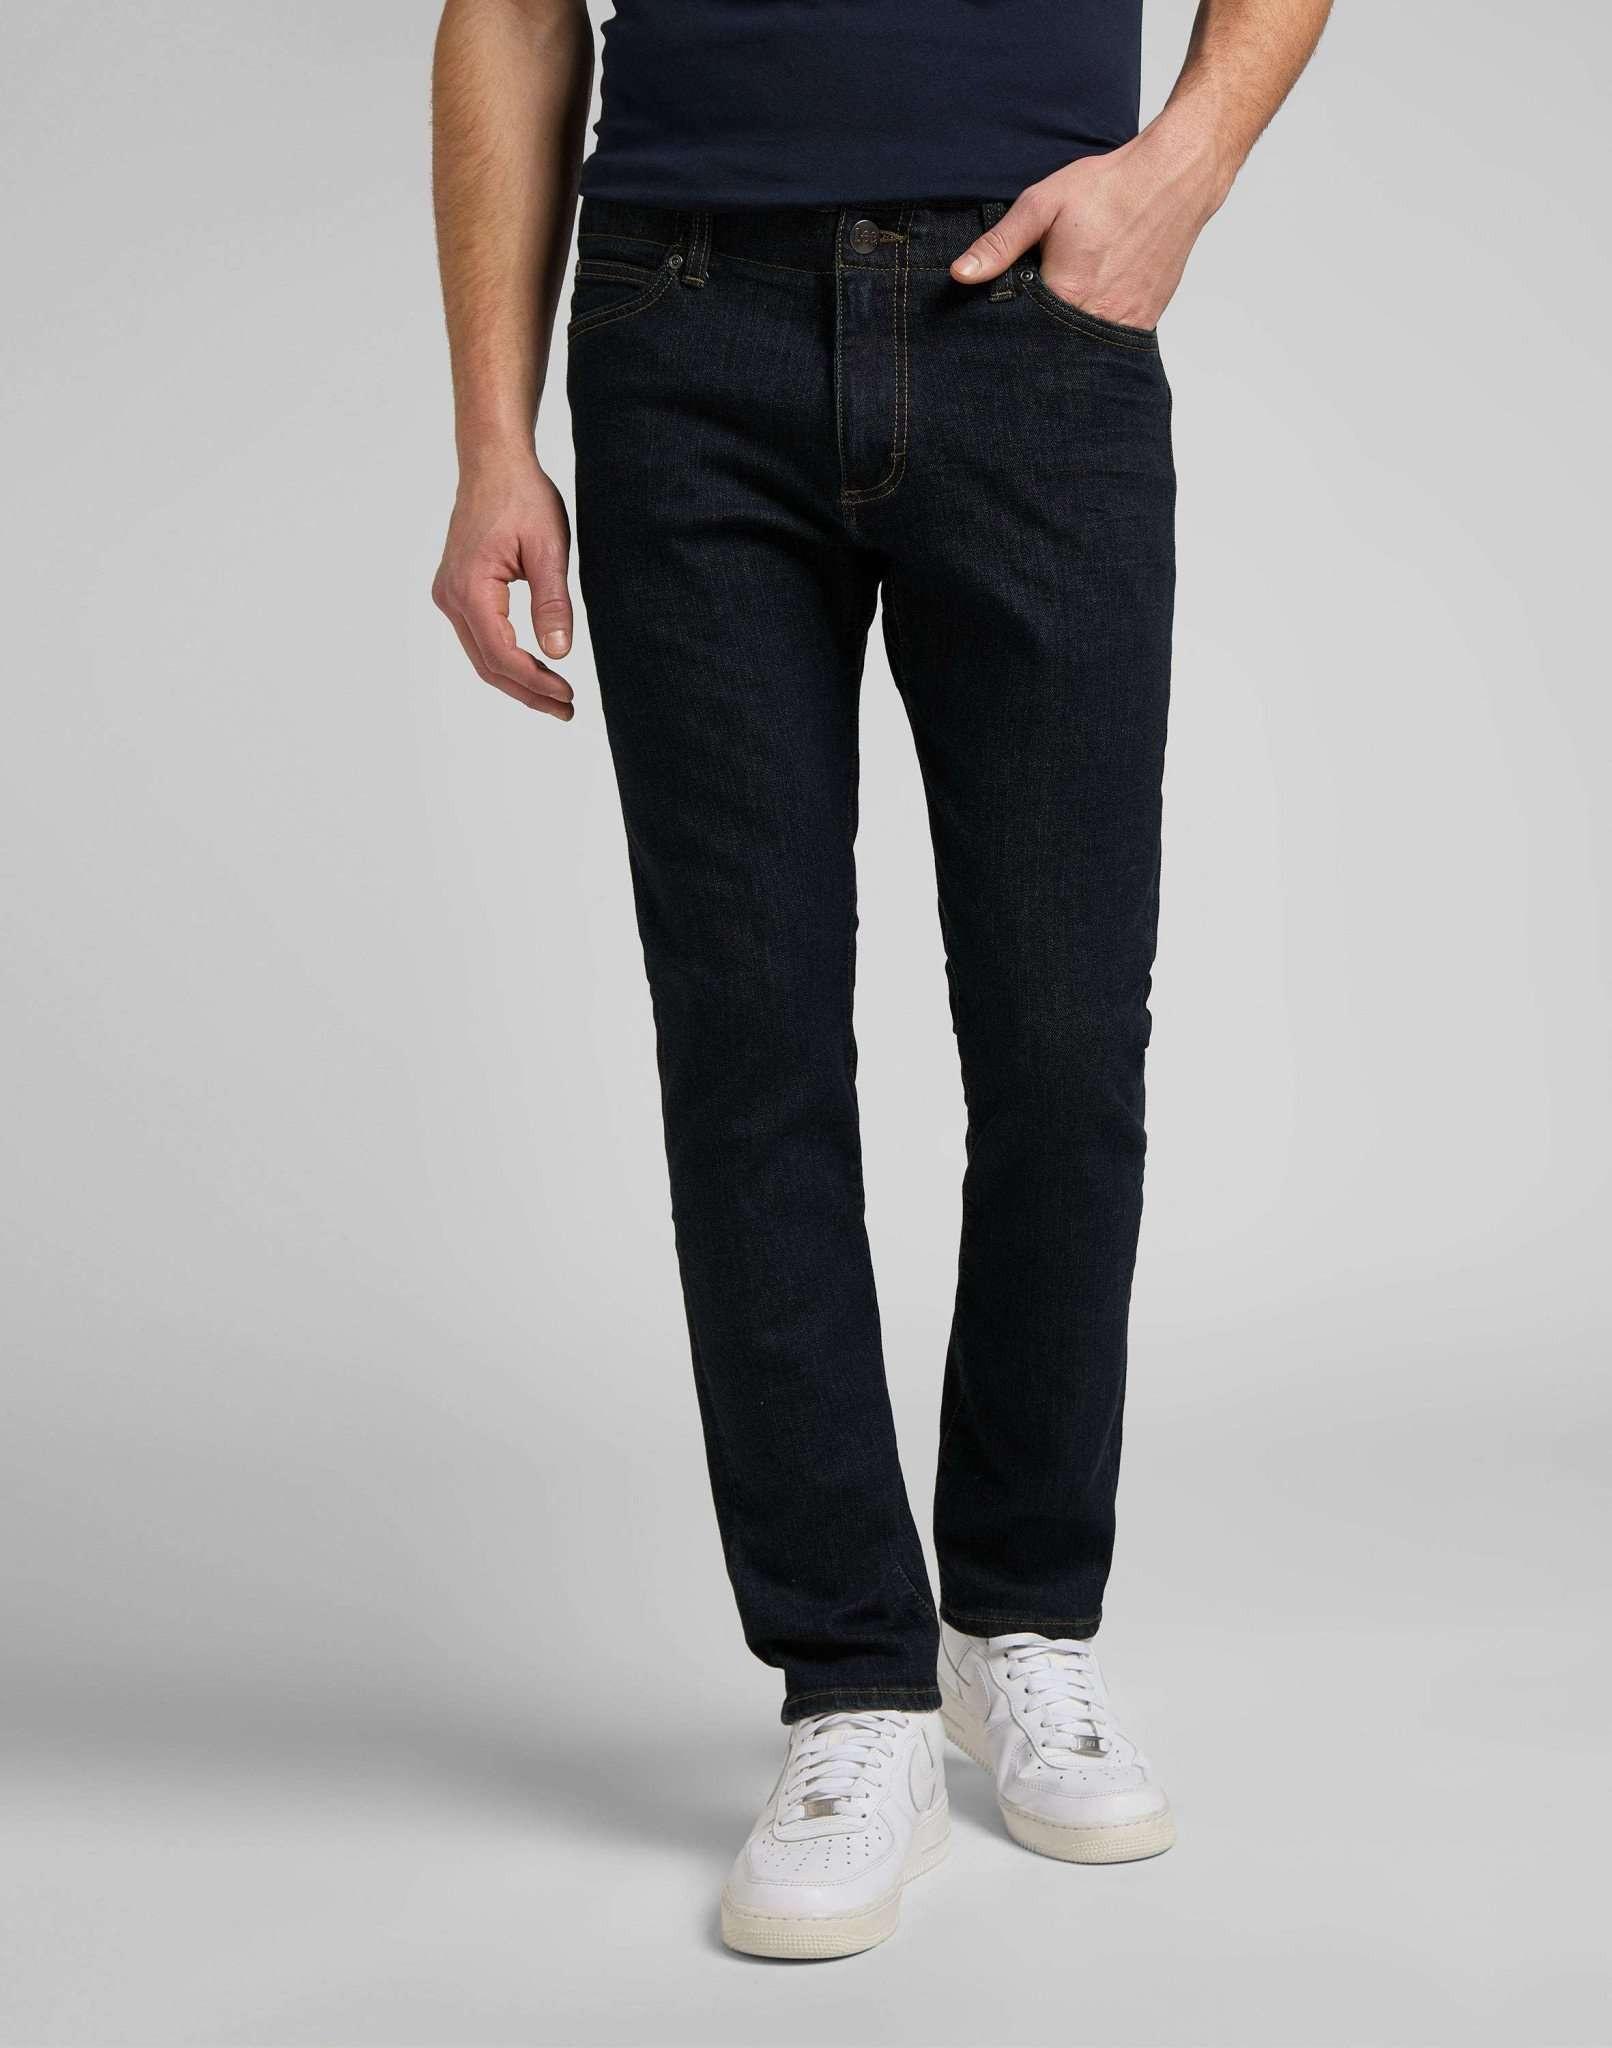 Jeans Skinny Fit Xm Herren Blau Denim L34/W36 von Lee